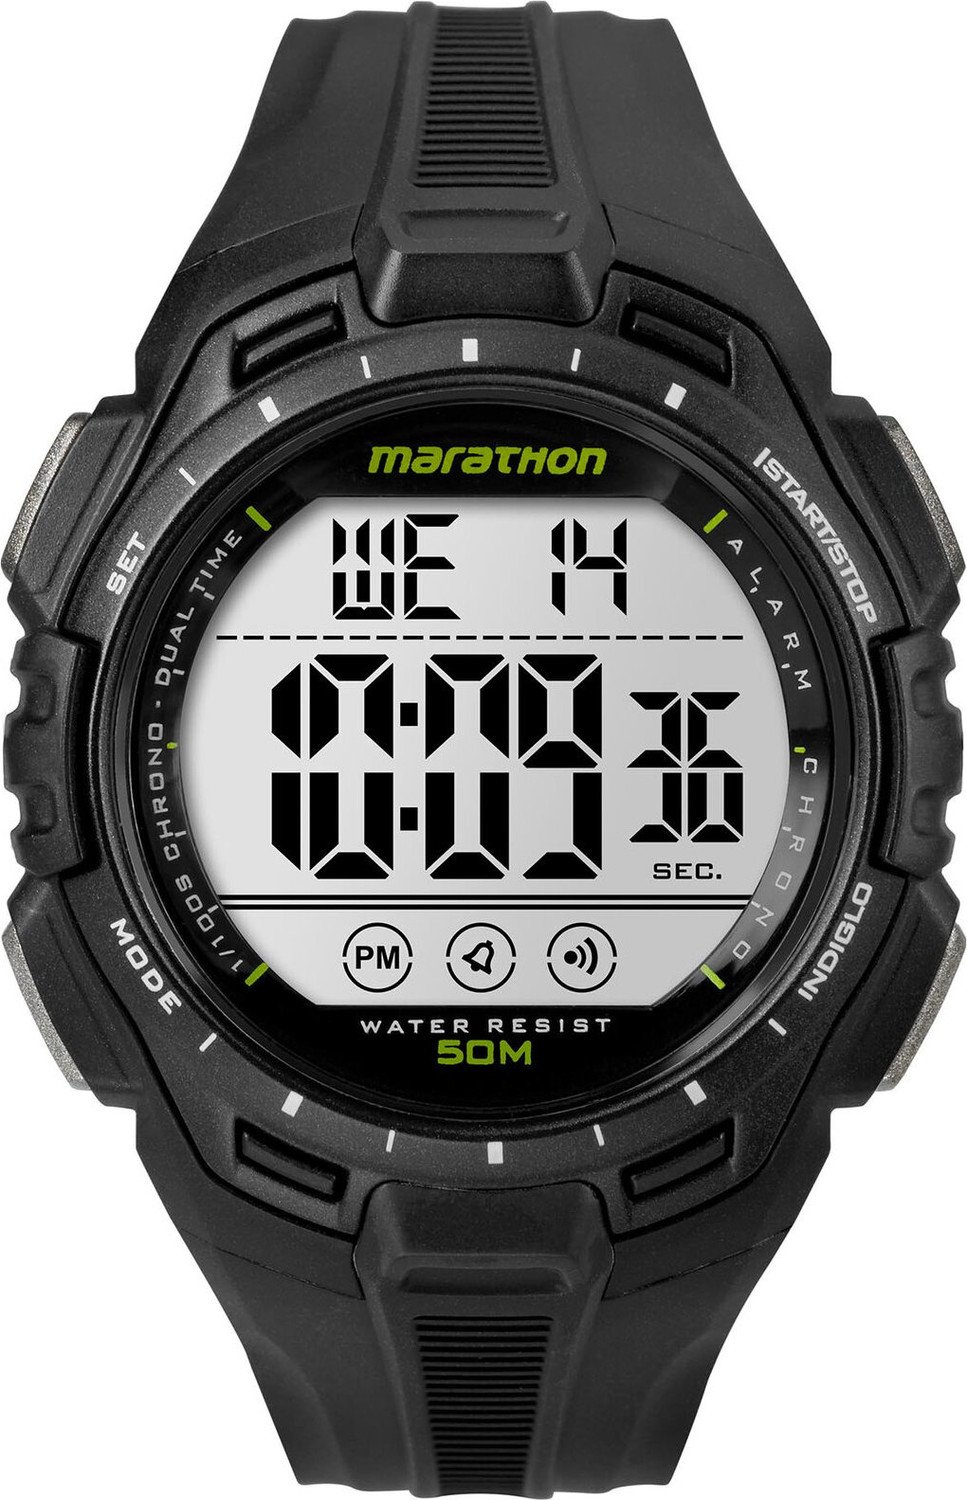 Hodinky Timex Marathon TW5K94800 Black/Black